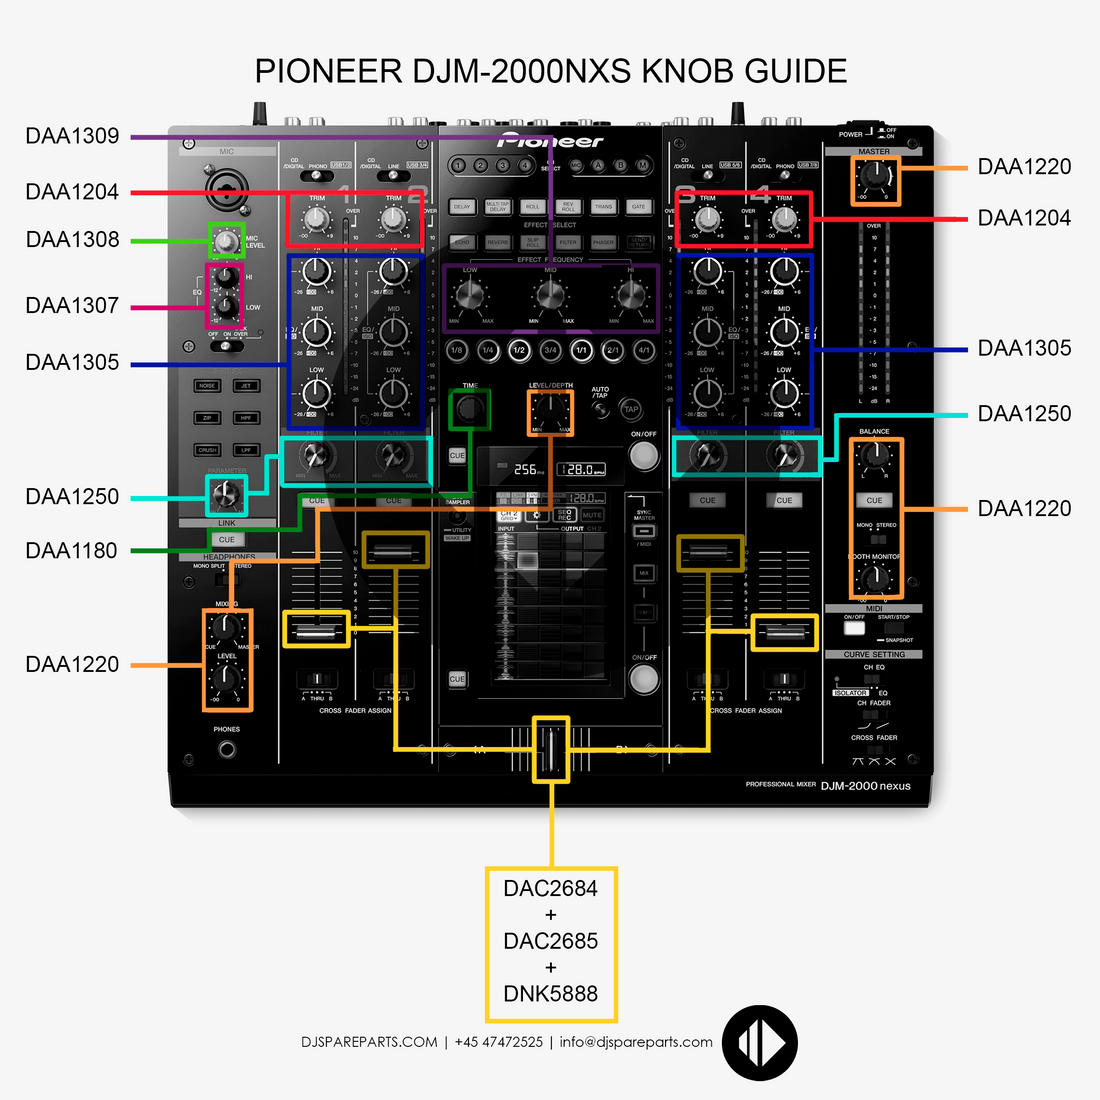 Pioneer DJM-2000 Nexus